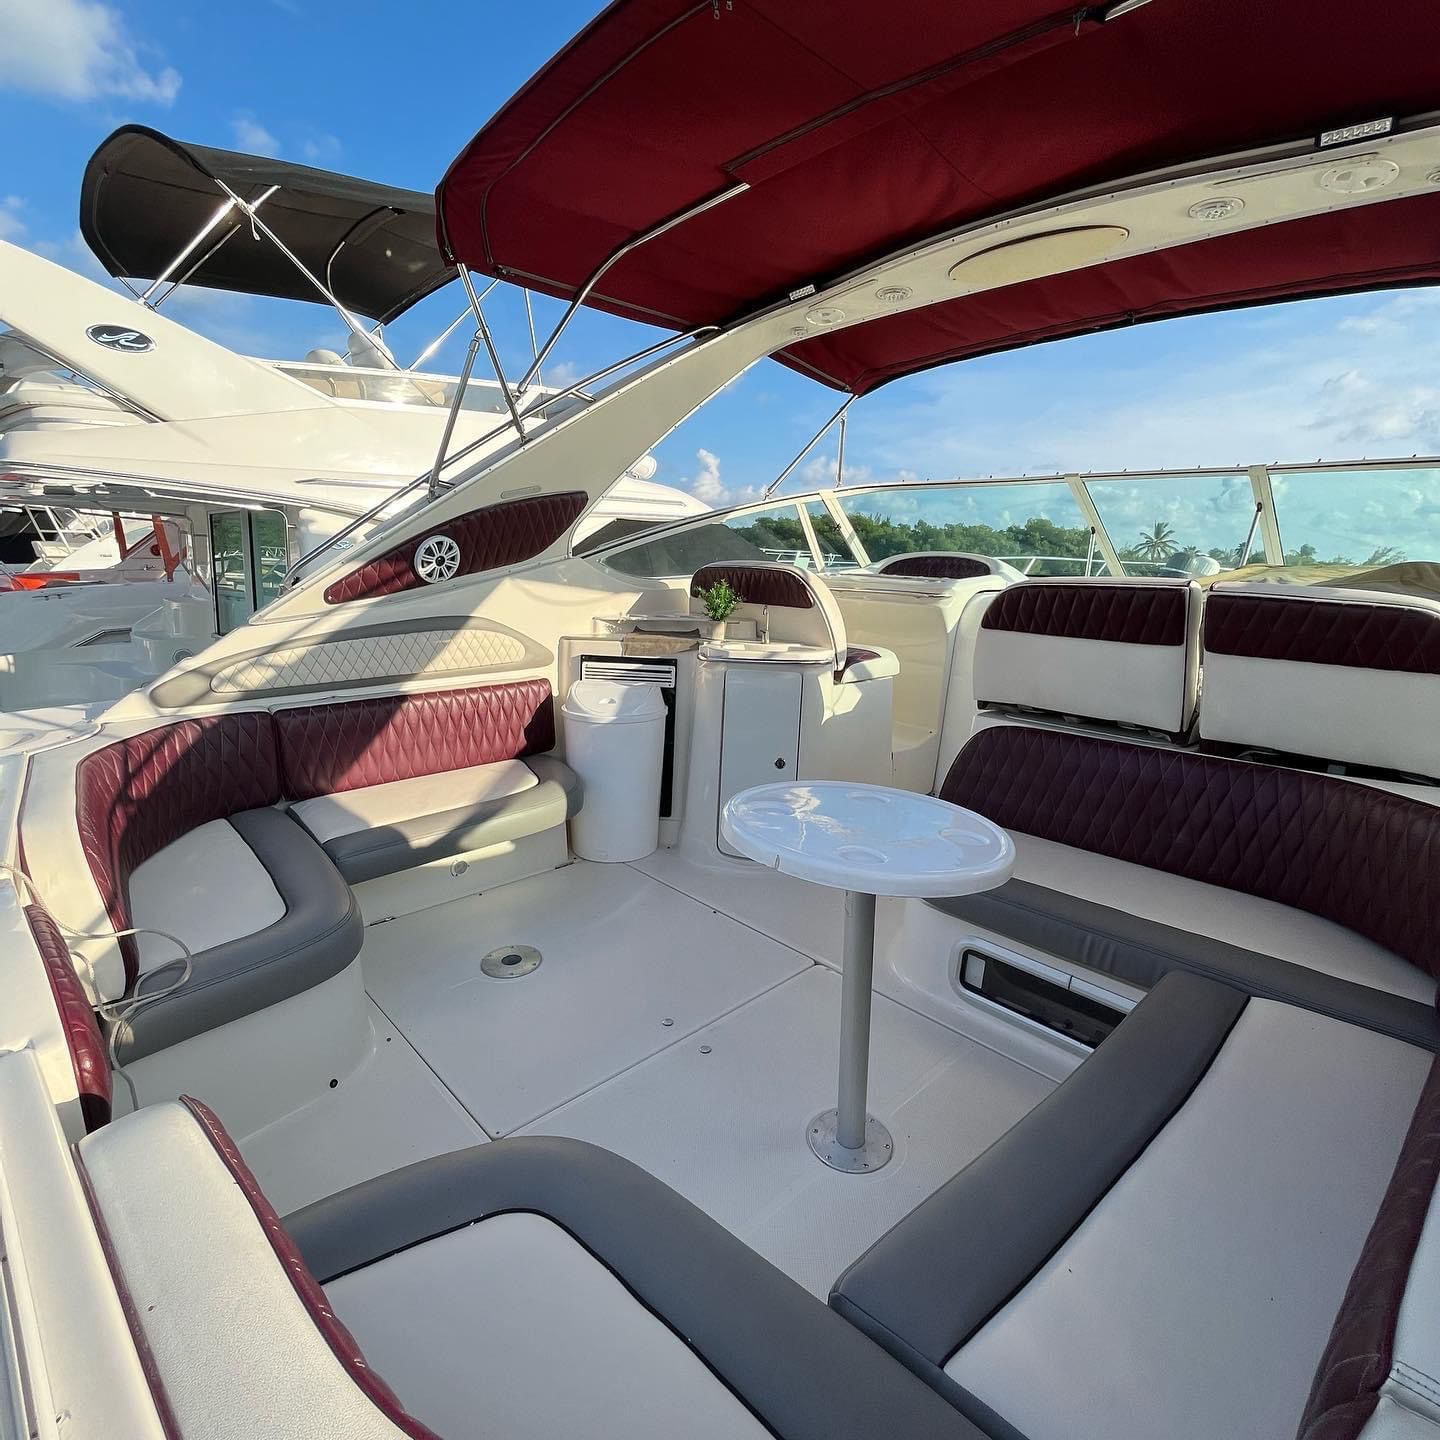 Yacht maxum Cancun 42 ft